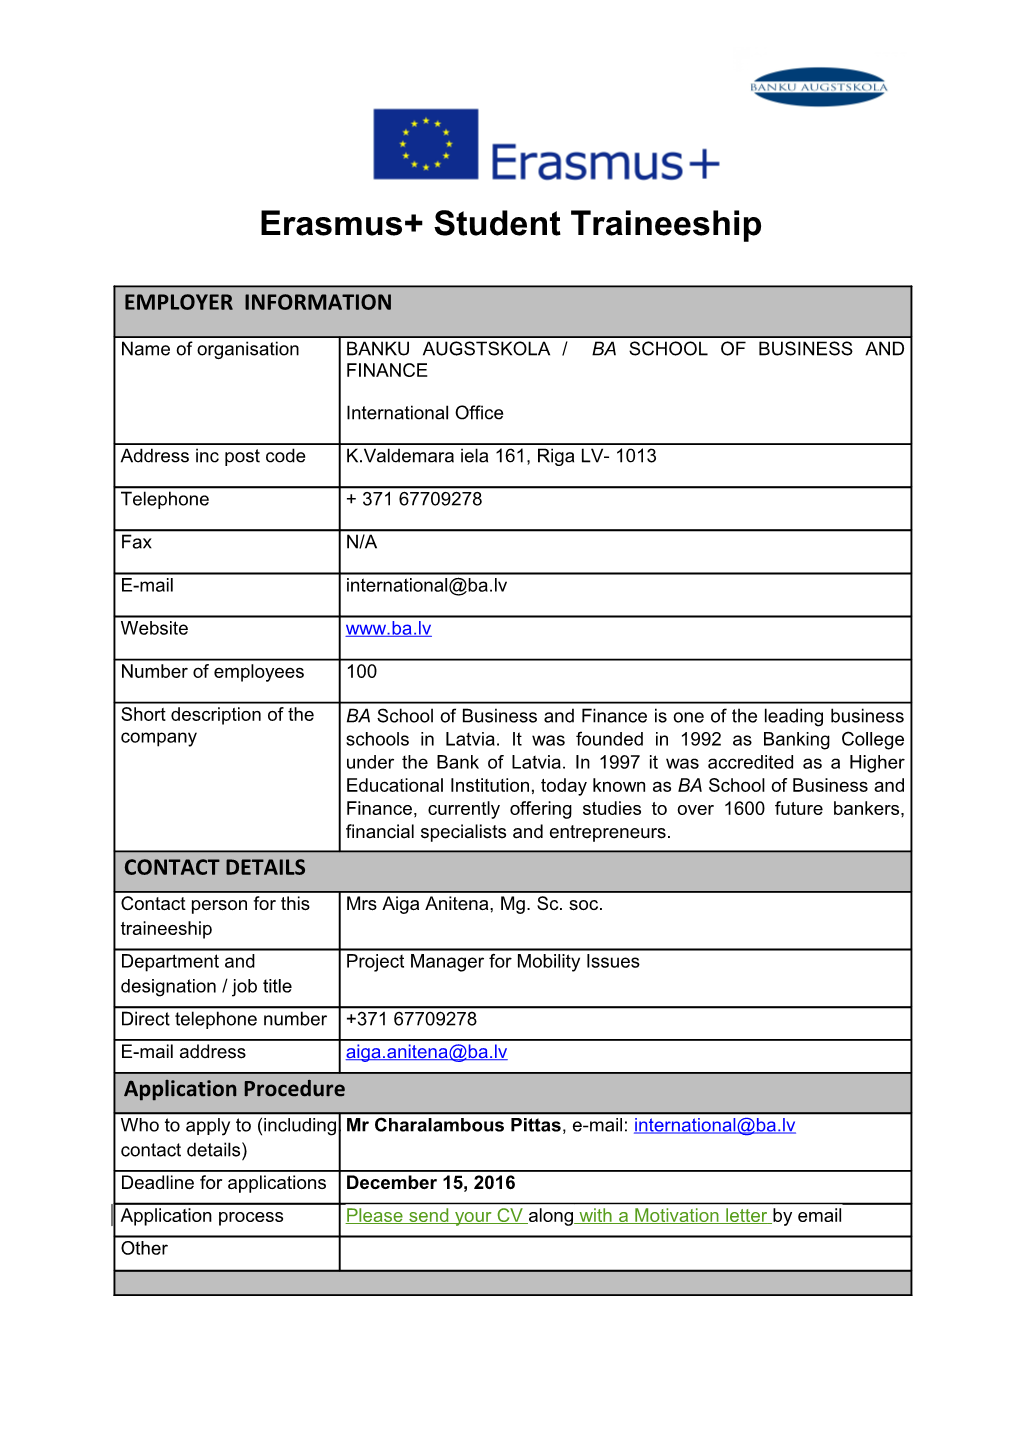 Erasmus+Student Traineeship